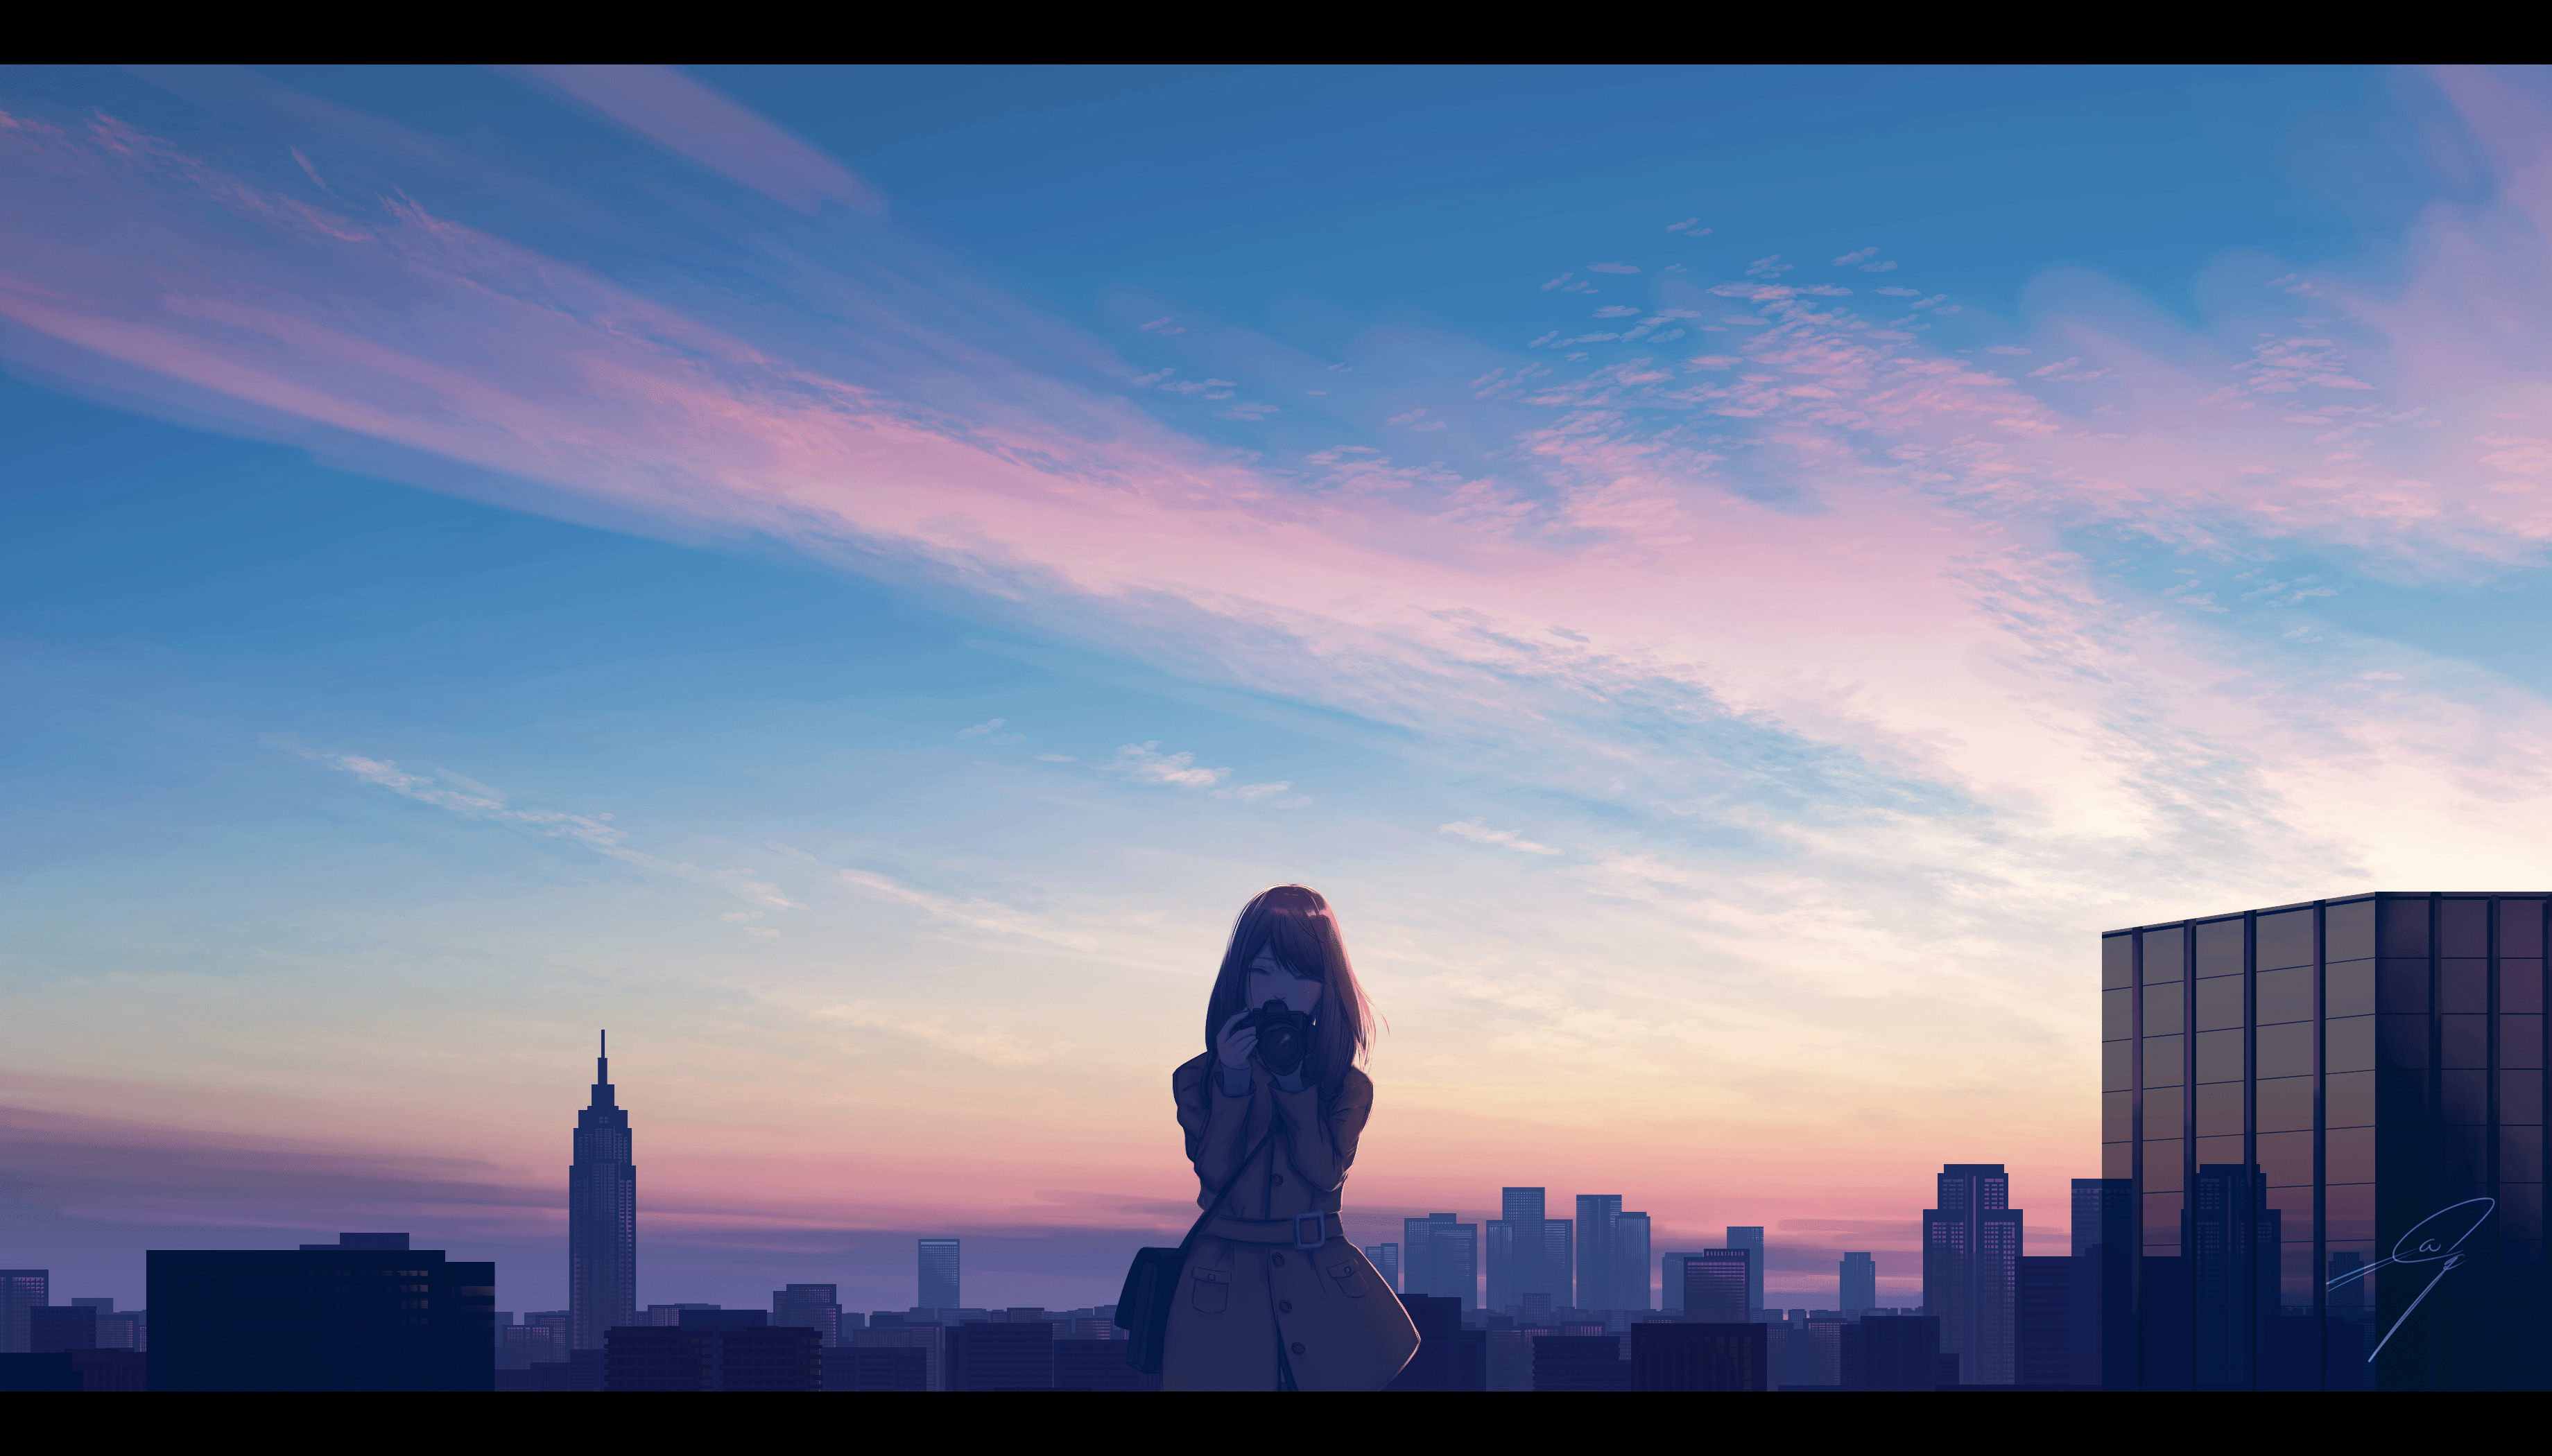 Wallpaper : anime girls, artwork, Twilight, sunset, clouds, city, skyline, Empire State Building, New York City, Manhattan, sky 3680x2100